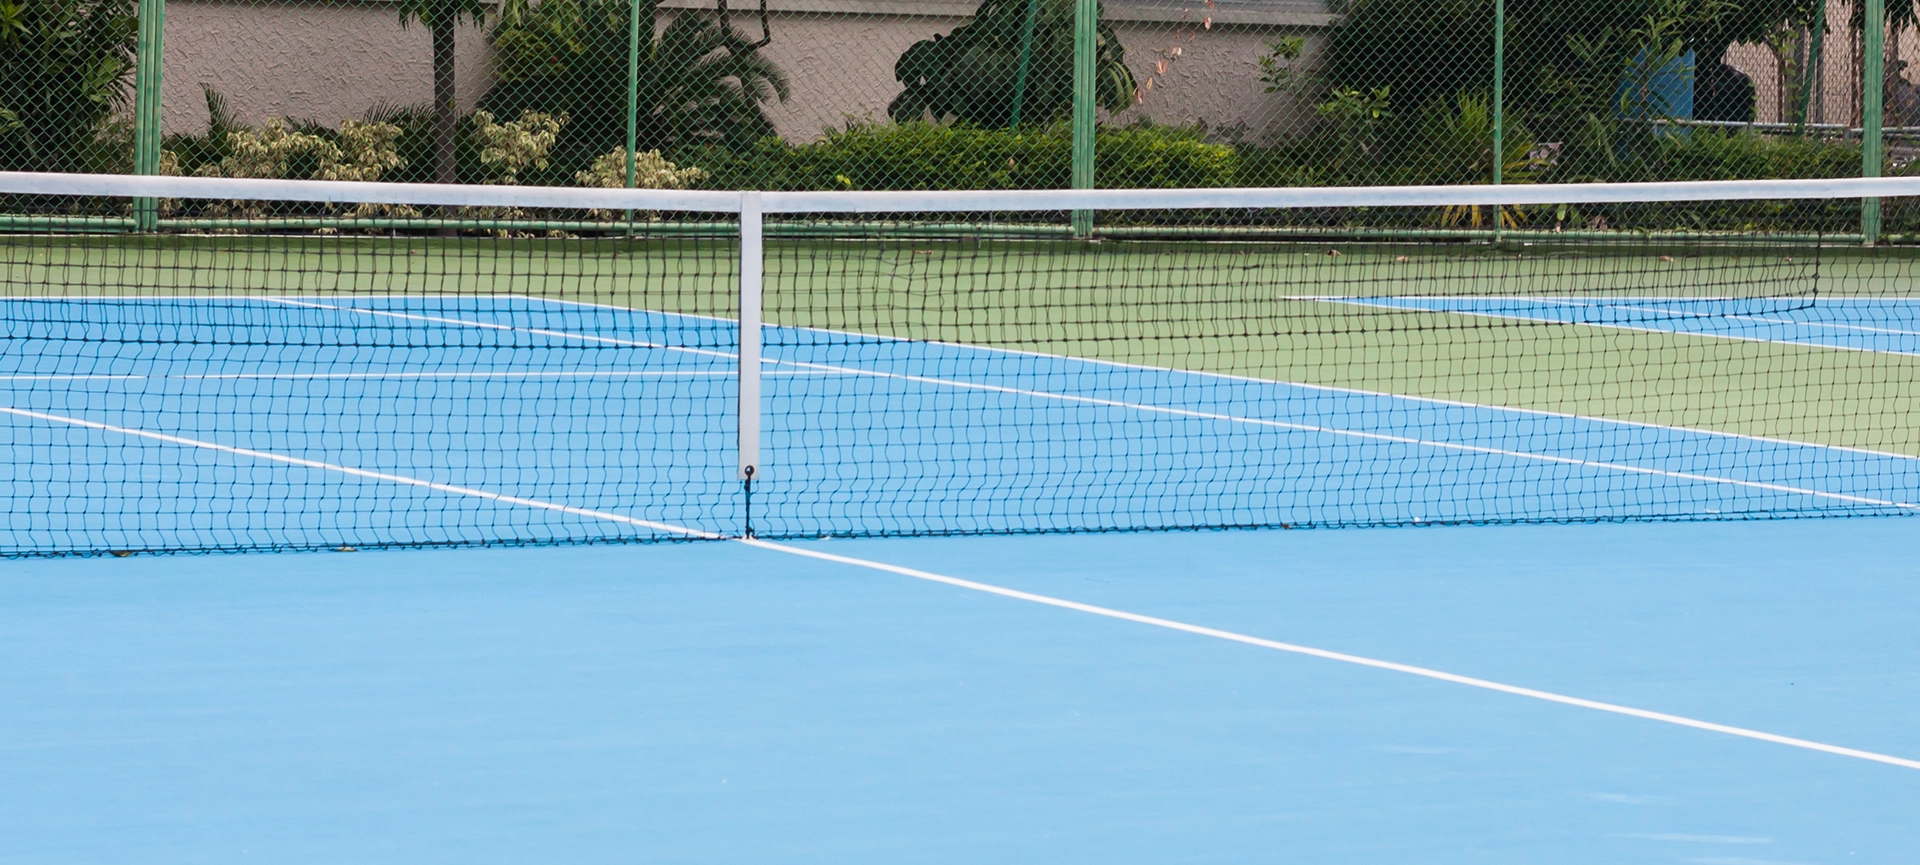 tennis court net system